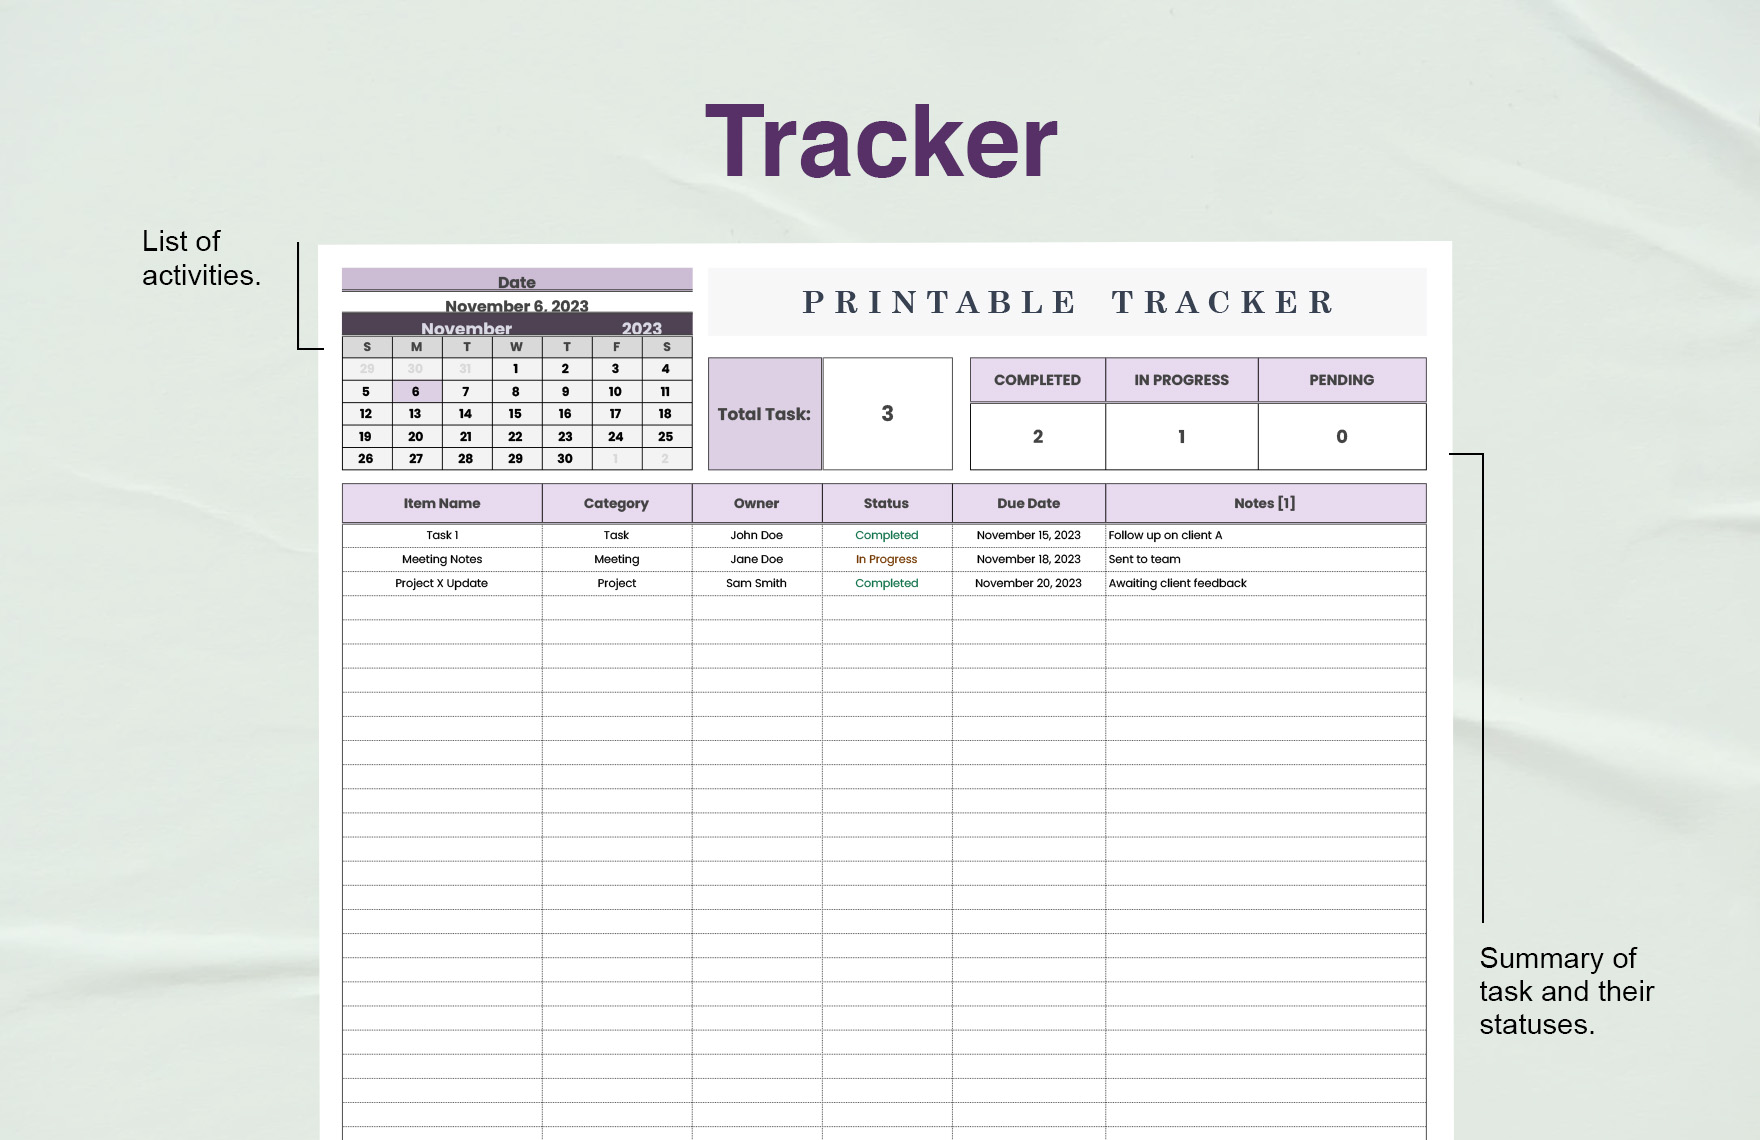 Printable Tracker Template